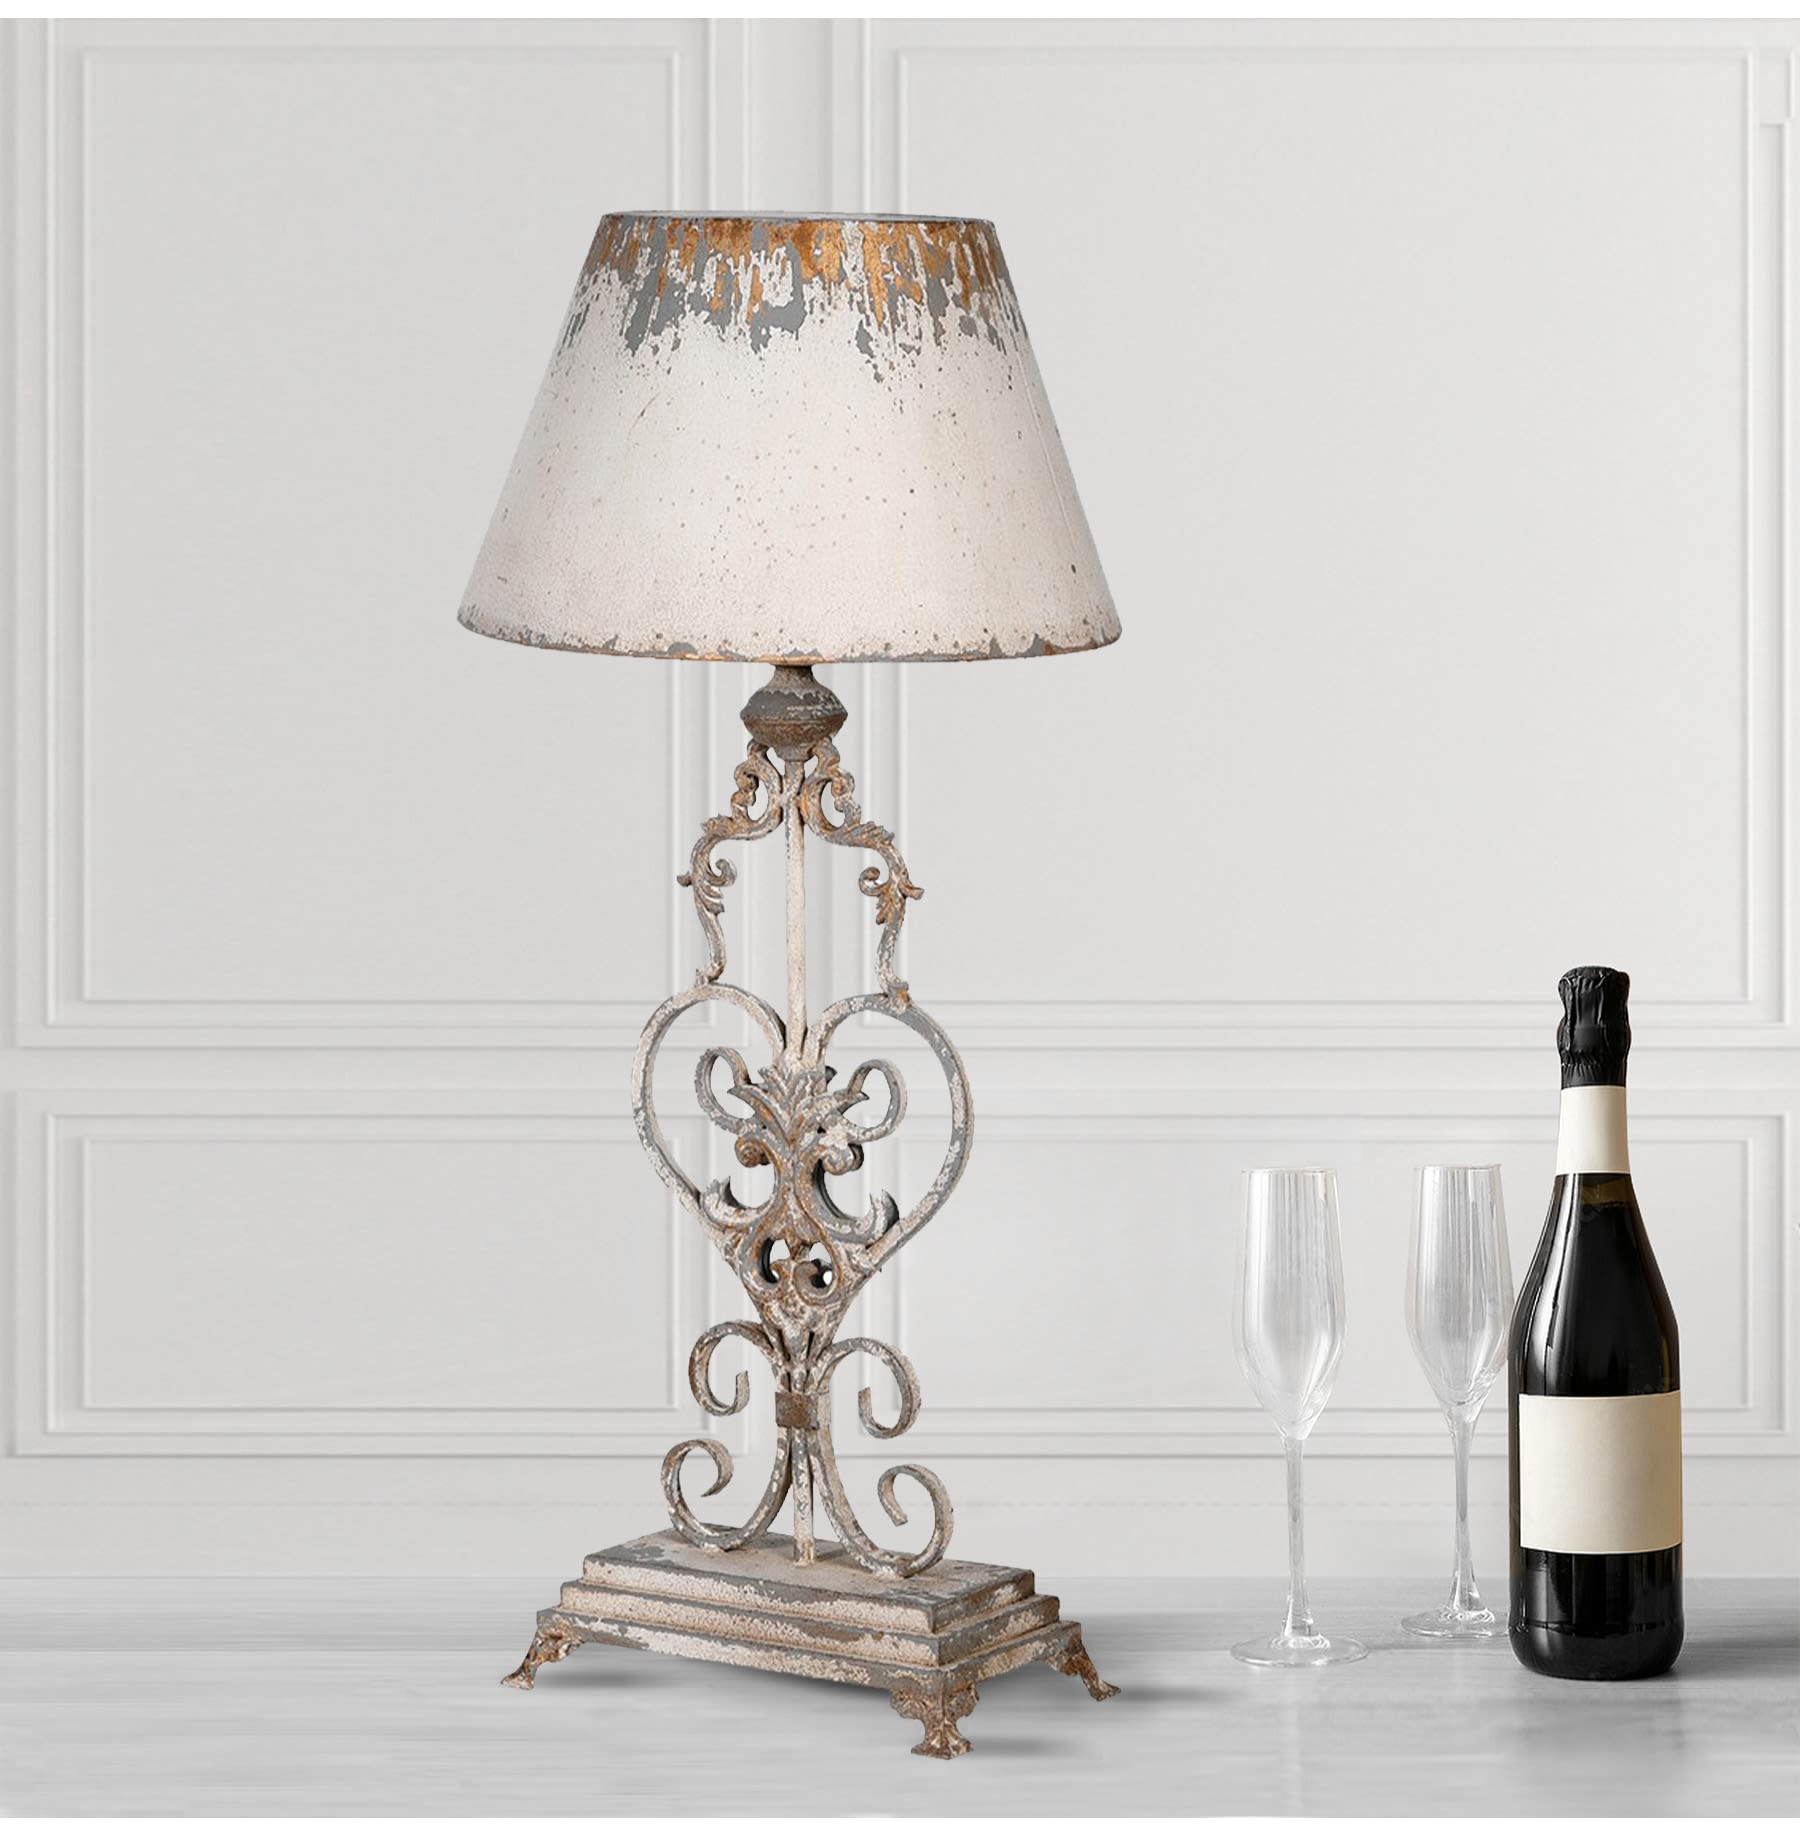 Ornate Shaped Table Lamp